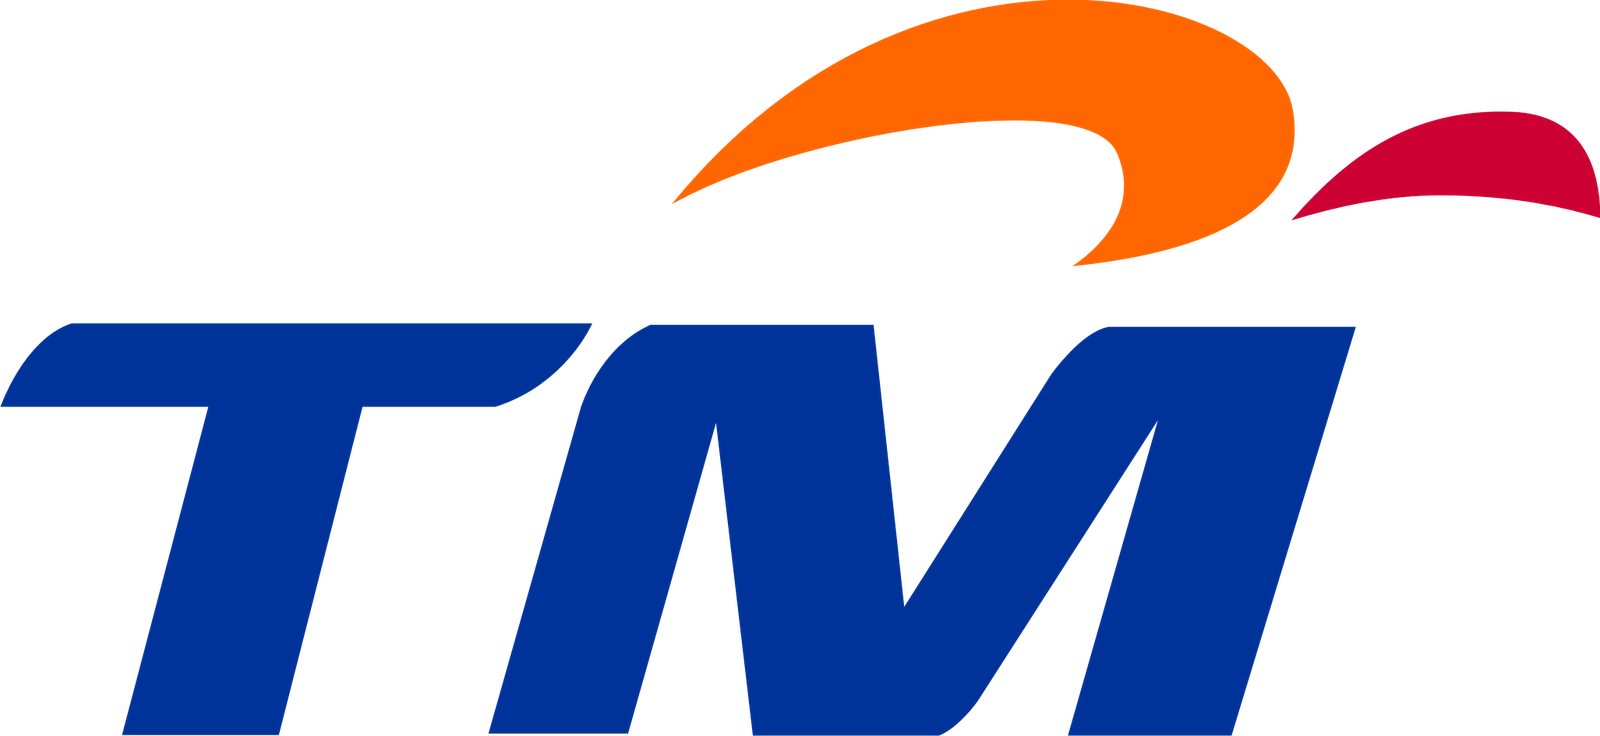 Logo Bank dan Telkom Malaysia - Kumpulan Logo Indonesia